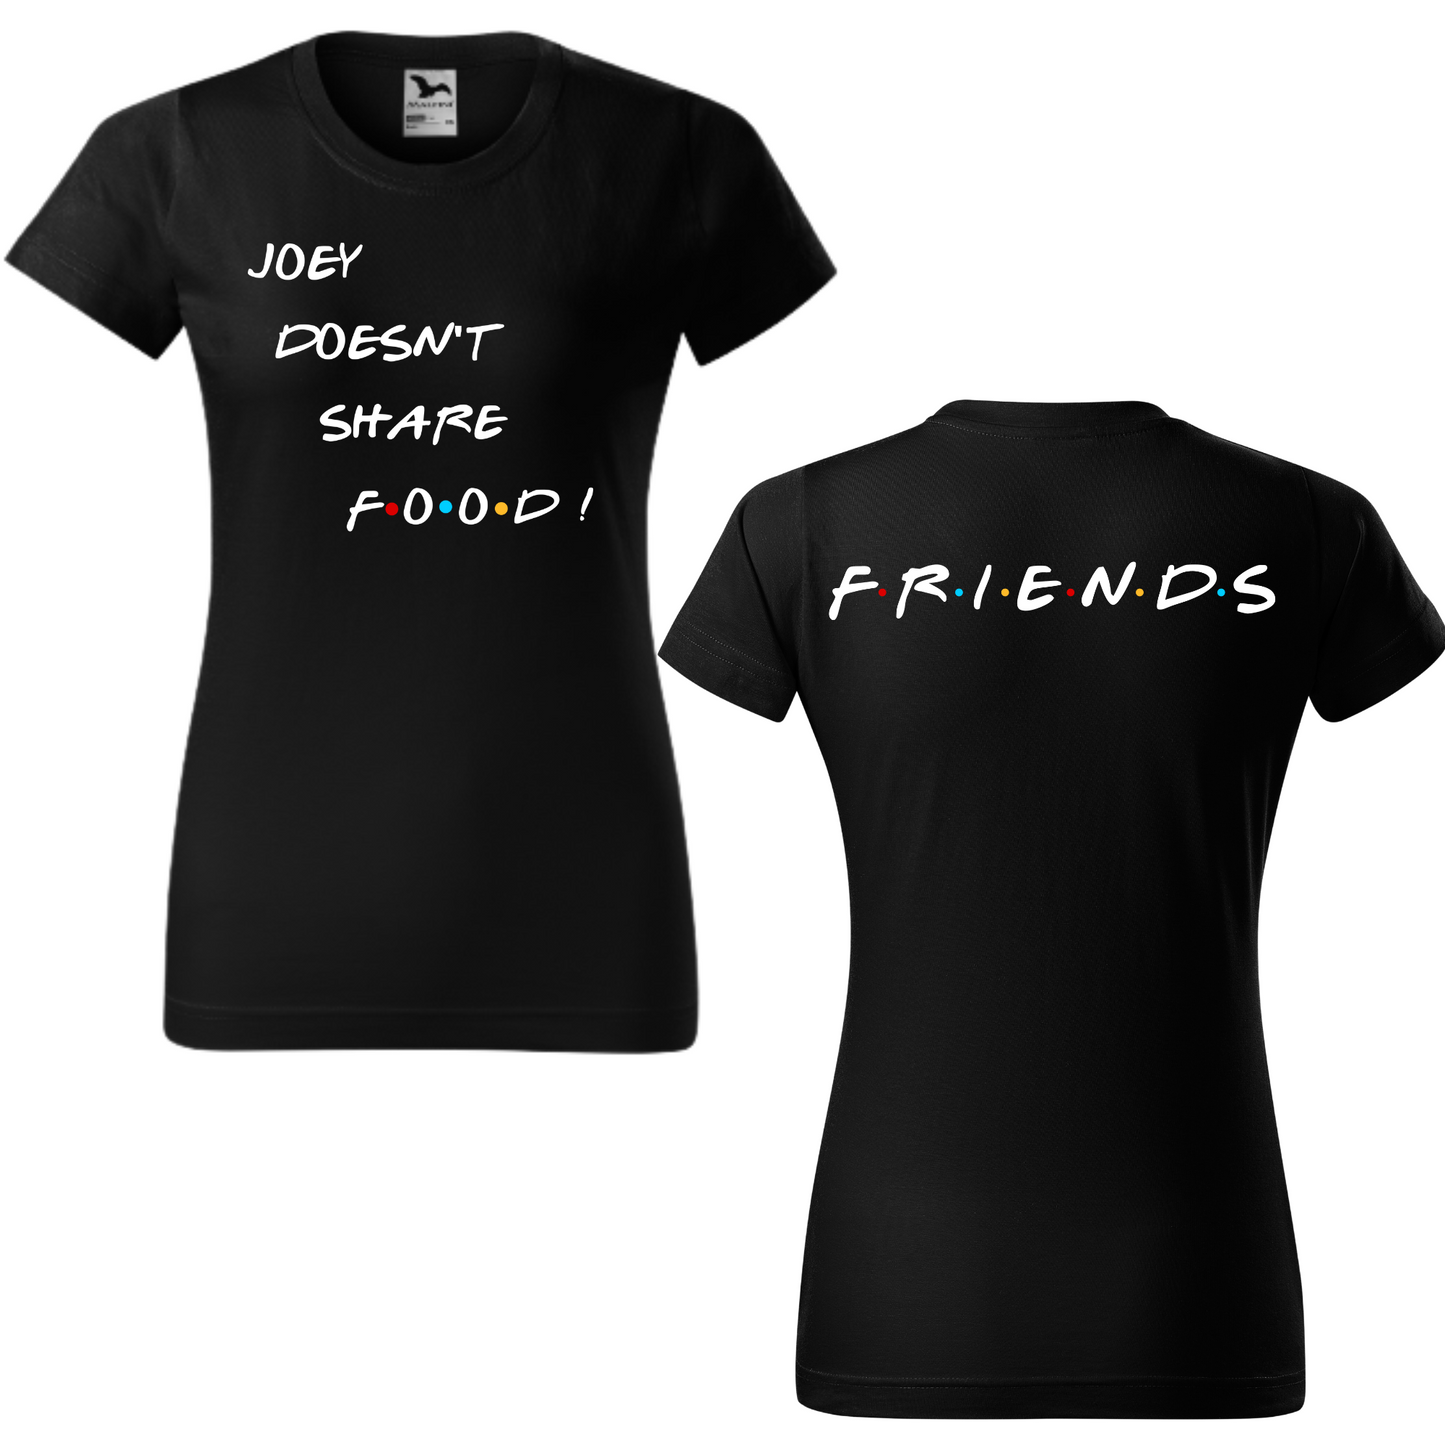 Tricou personalizat damă - Joey Doesn't Share Food